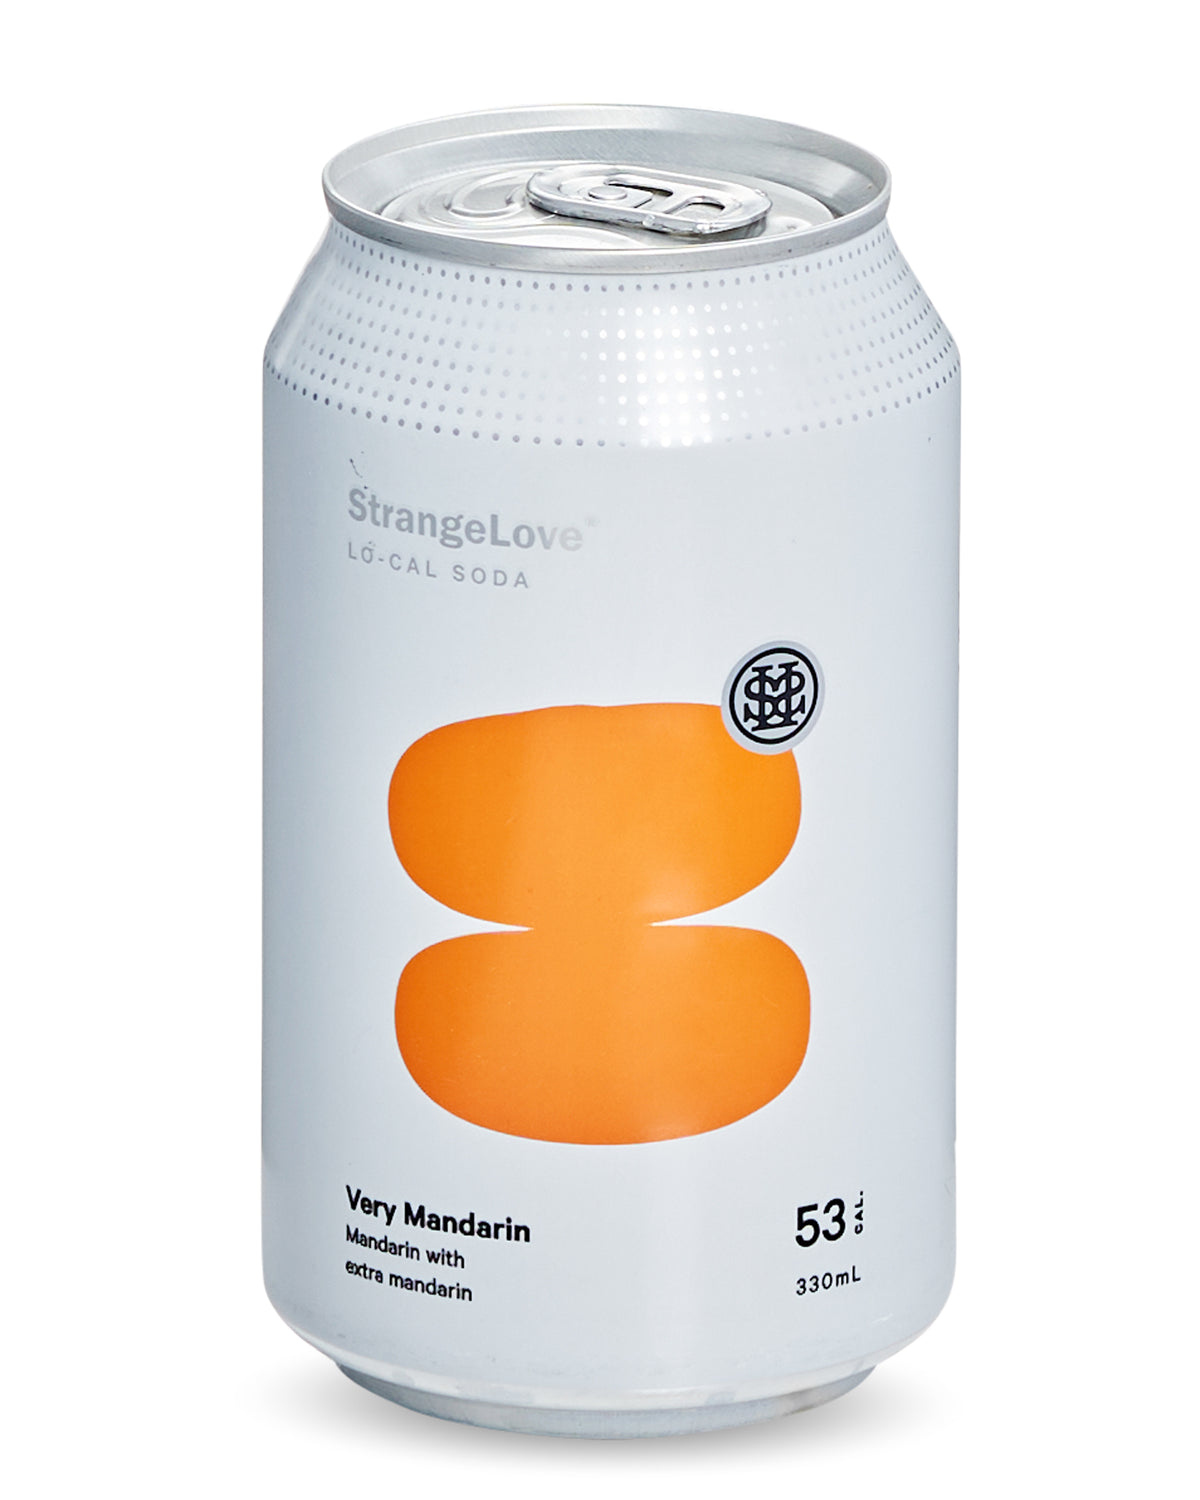 StrangeLove Very Mandarin Lo-cal soda